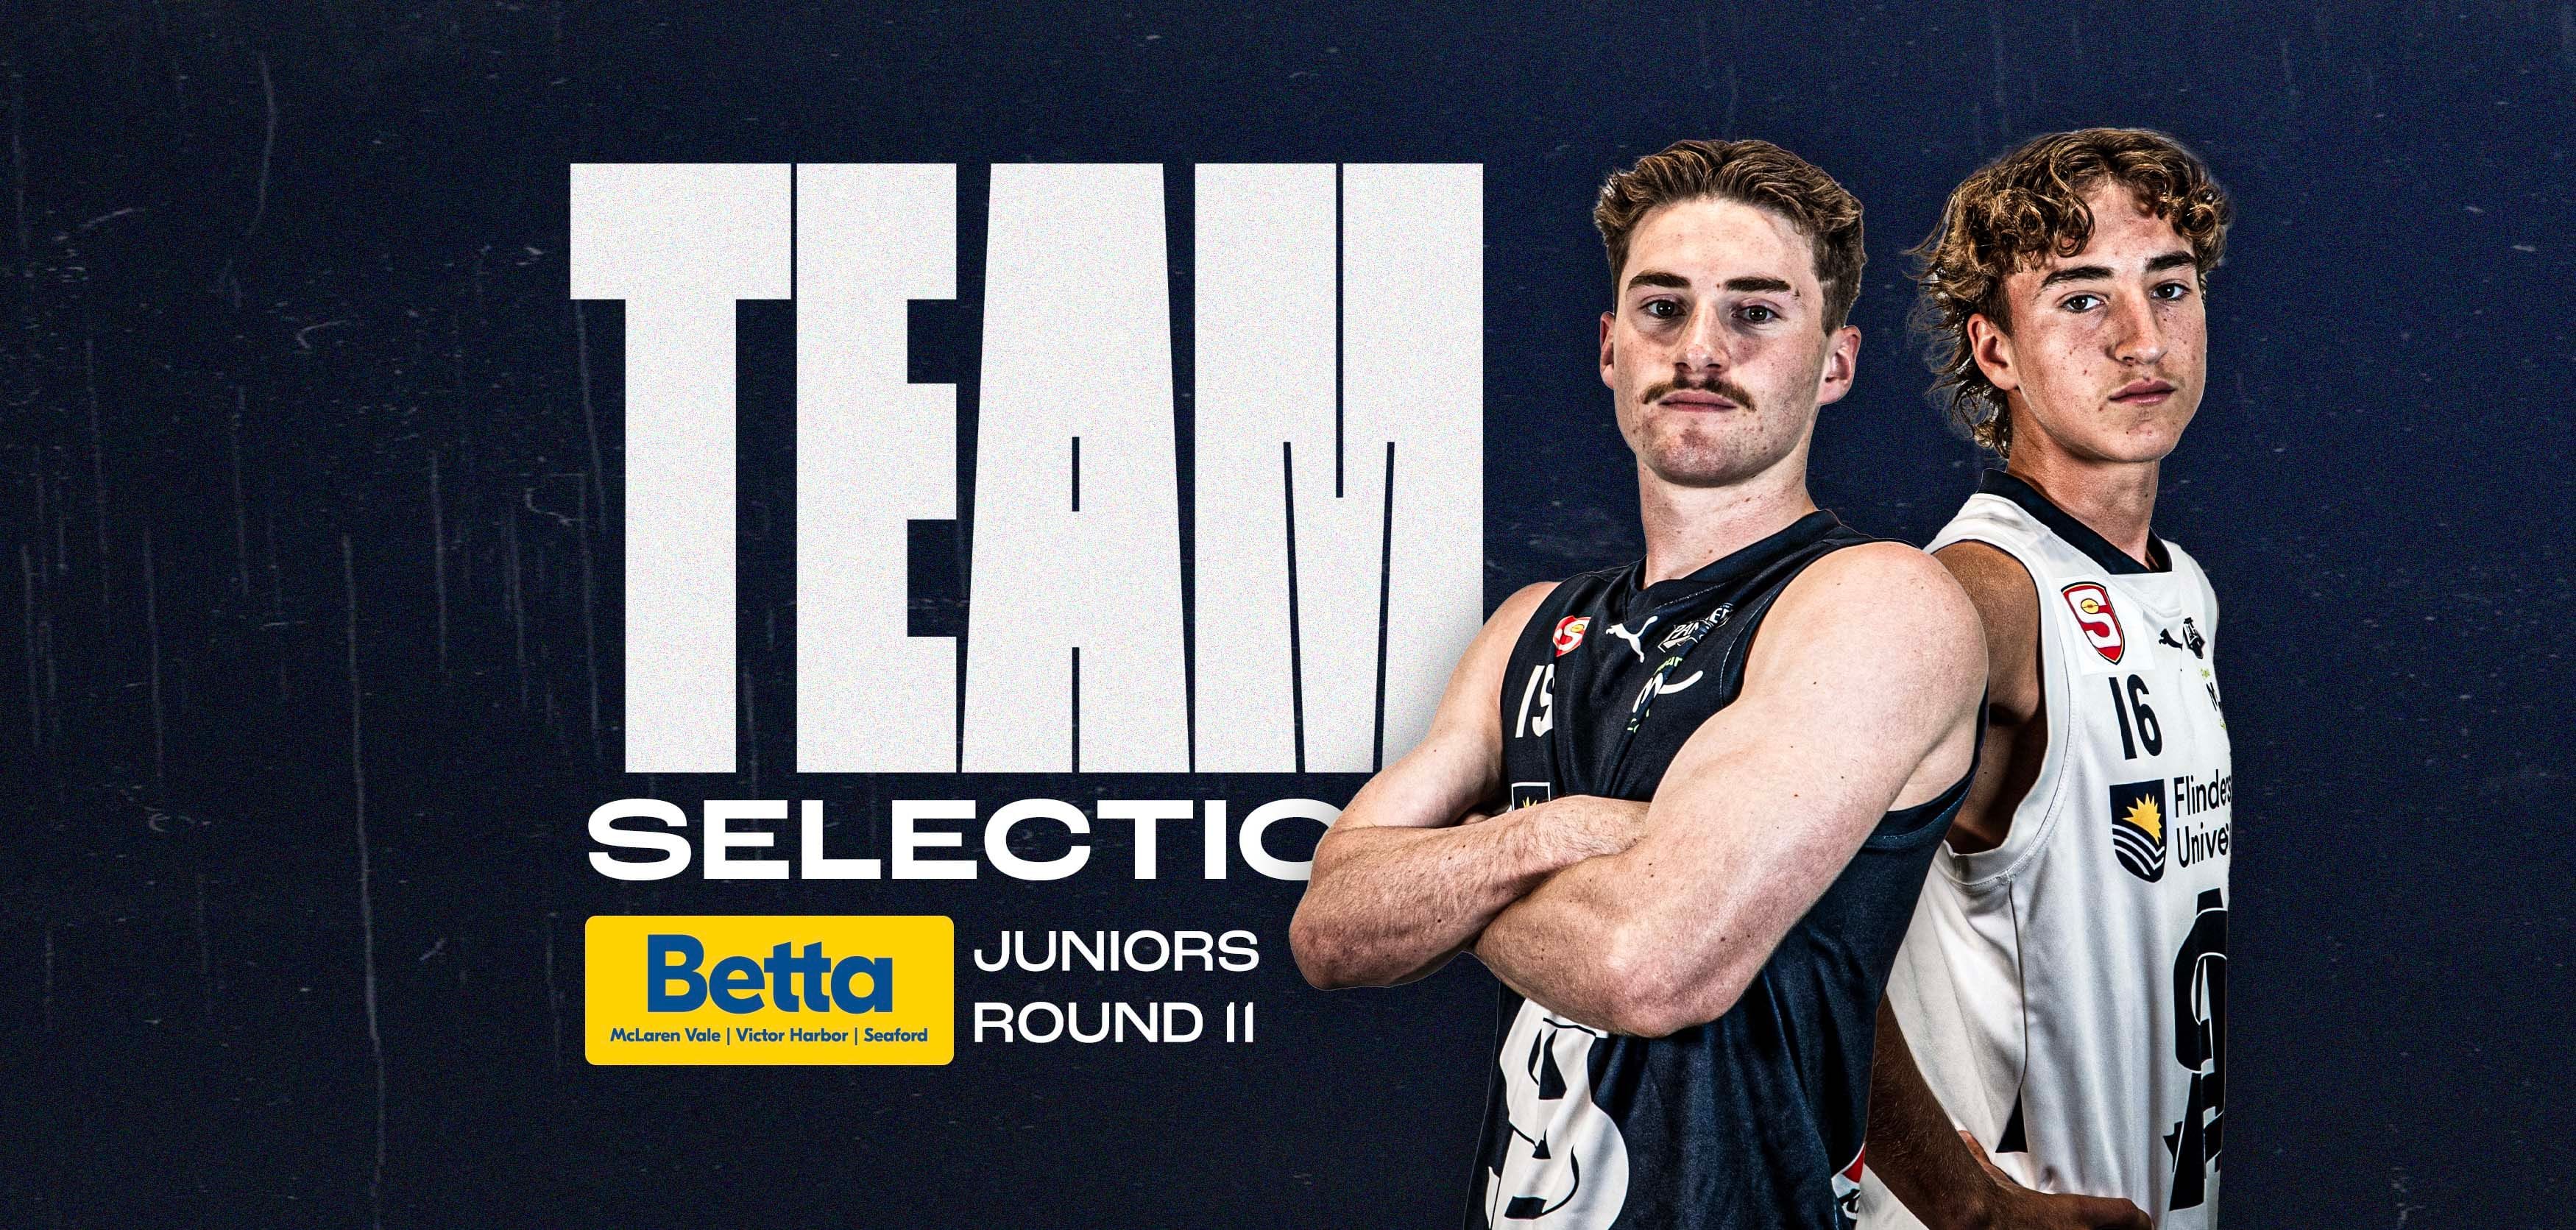 BETTA Team Selection: Juniors Round 11 v West Adelaide